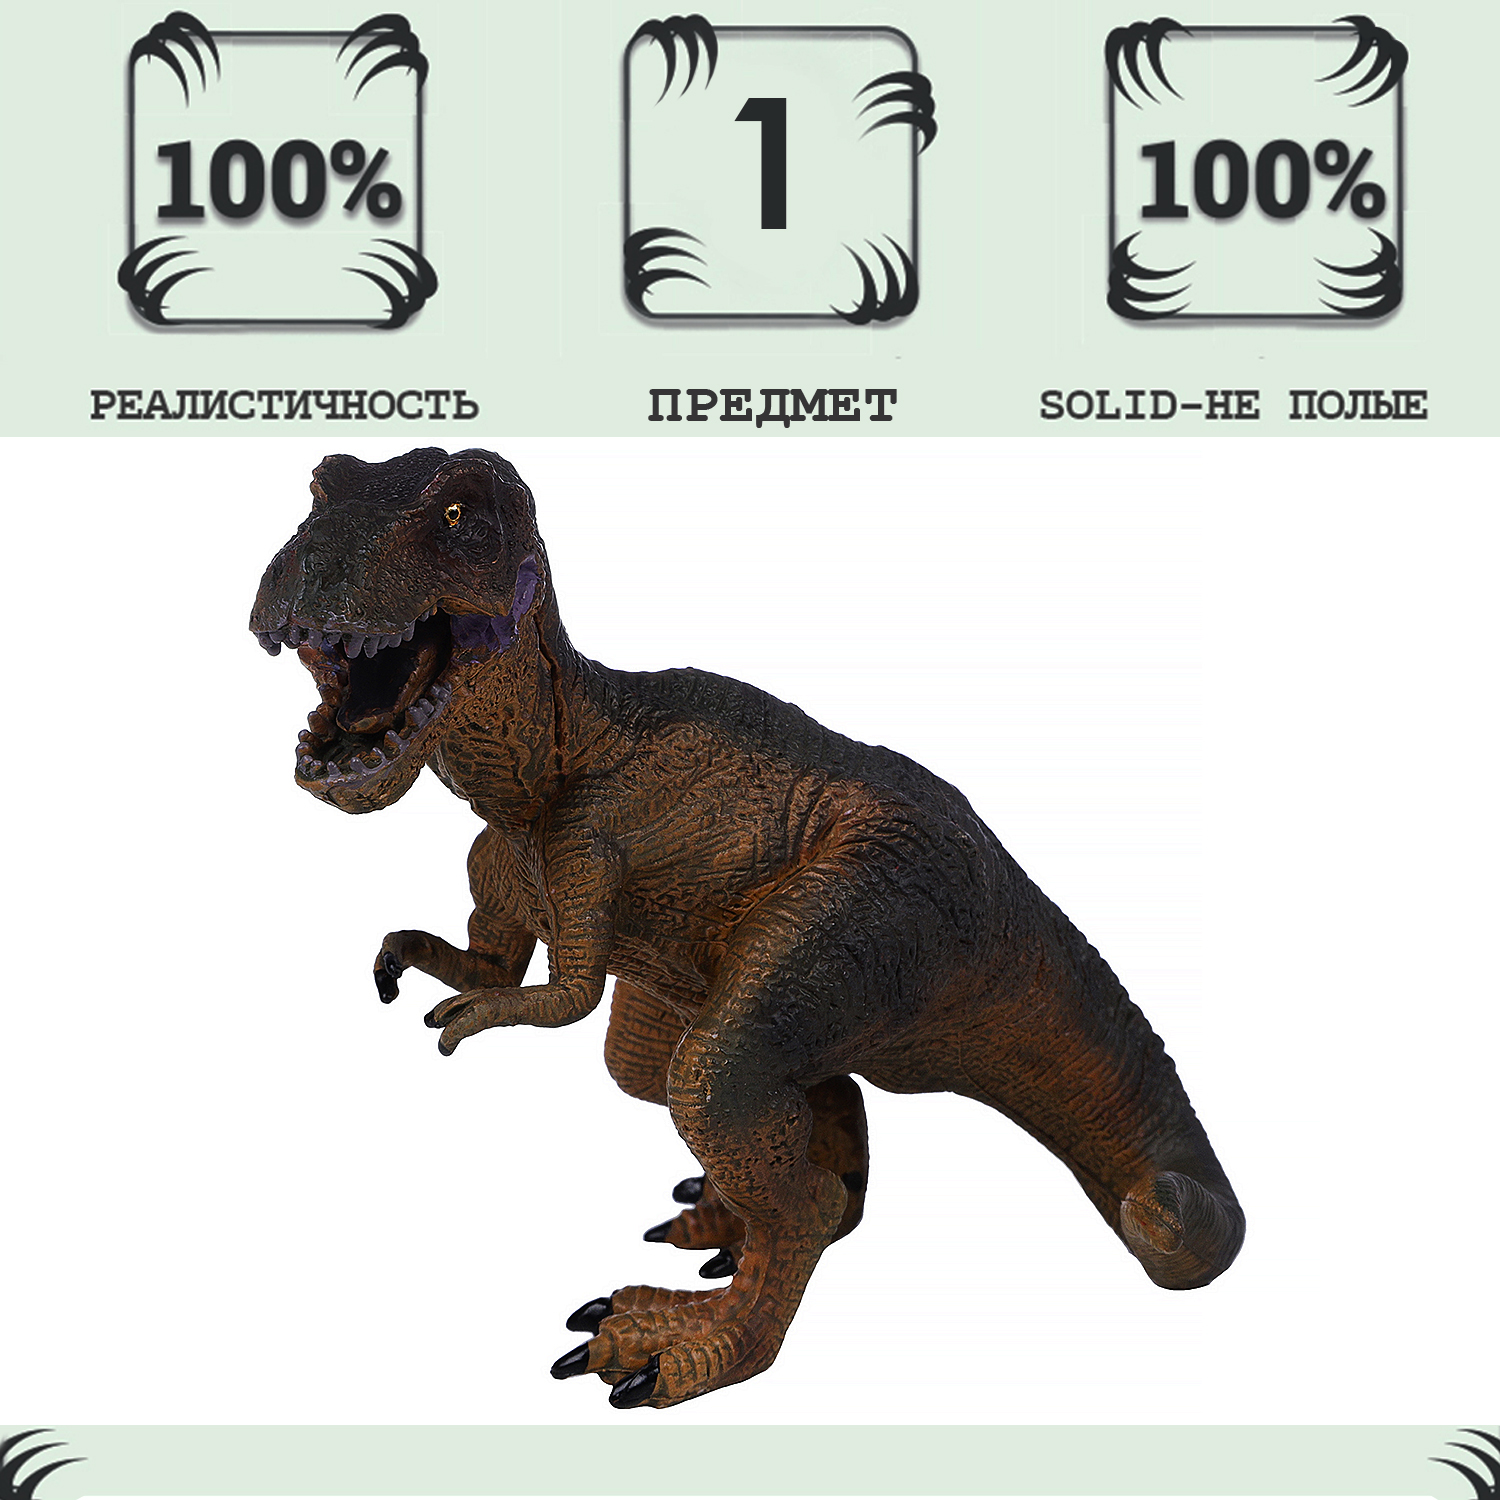 Фигурка Masai Mara динозавр серии Мир динозавров - Тираннозавр (Тирекс) MM216-036 игрушка динозавр серии мир динозавров masai mara трицератопс фигурка 30 см mm206 397